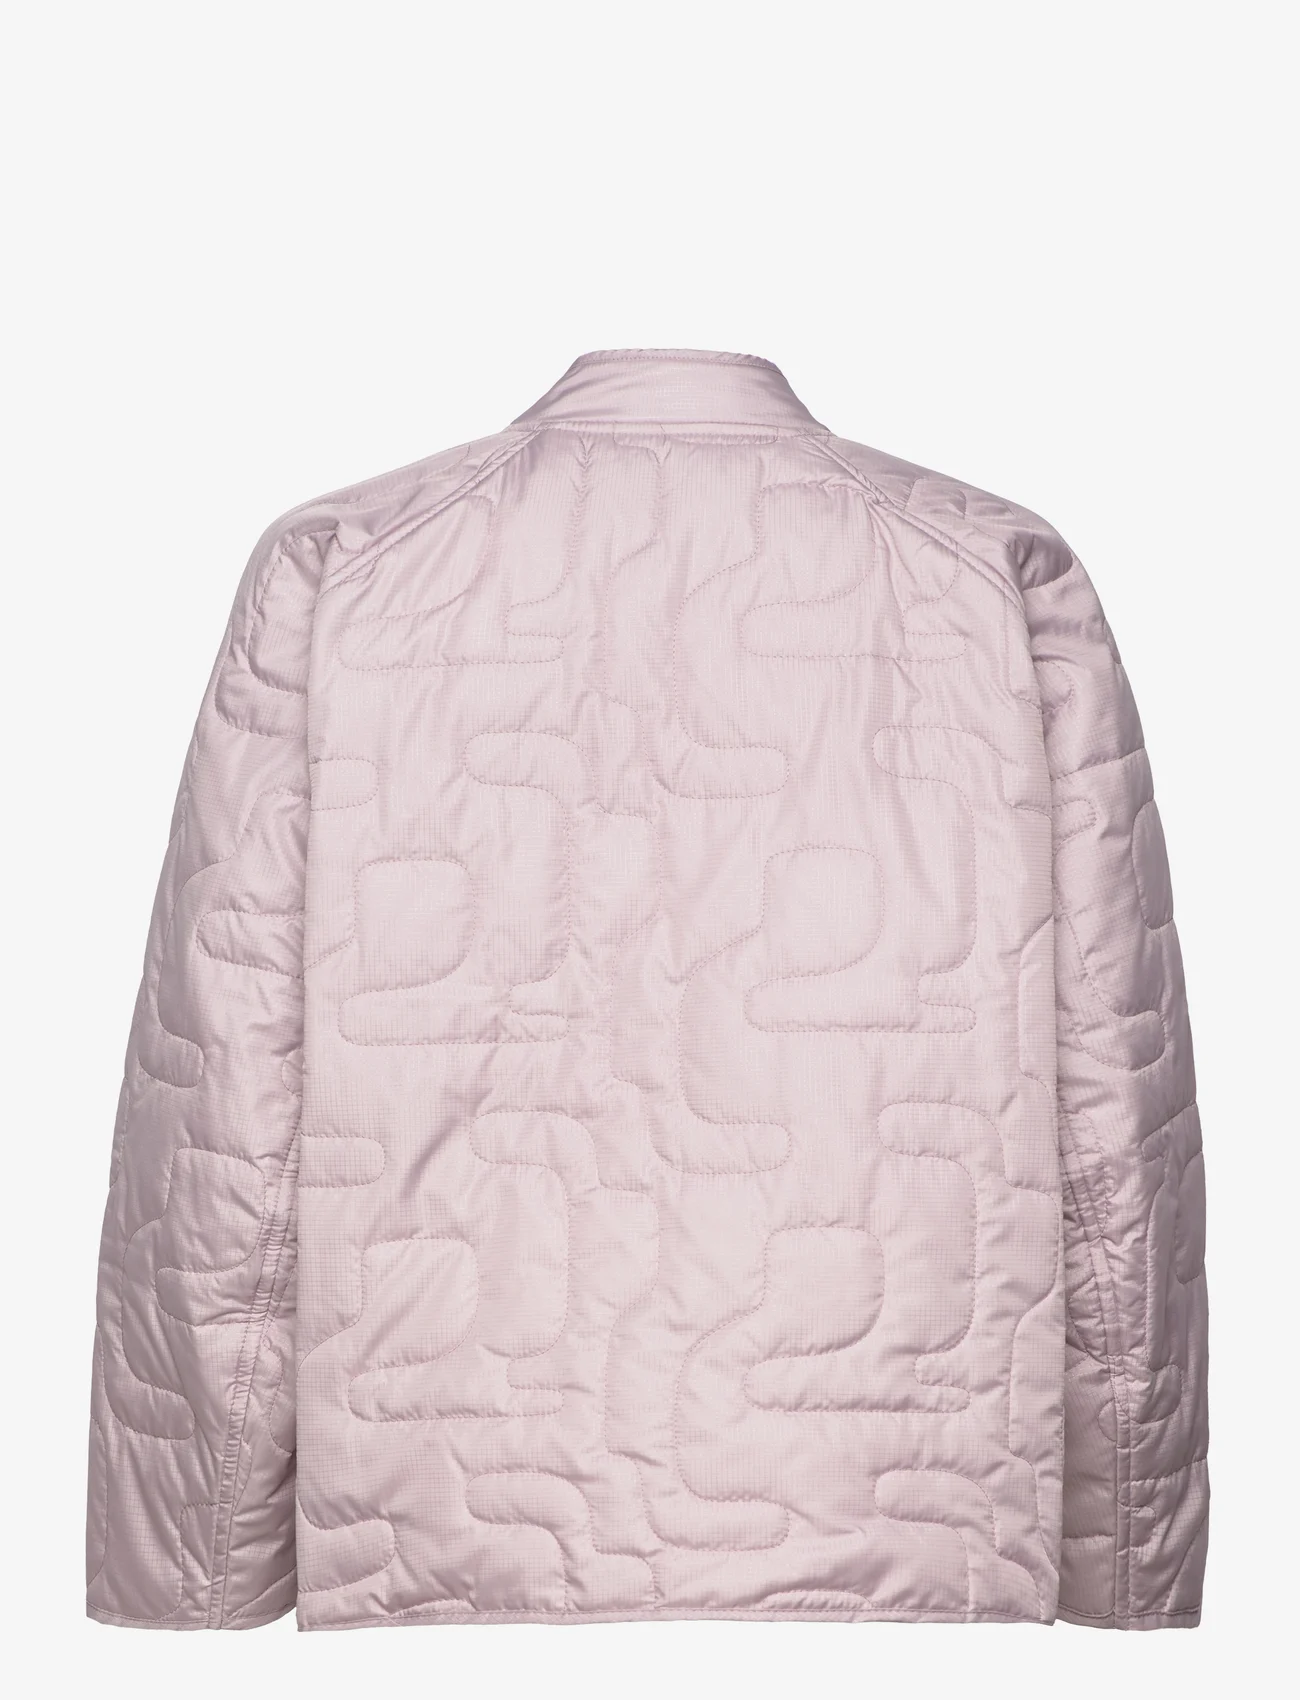 Rabens Saloner - Cophia - Deco quilt jacket - spring jackets - mouse - 1